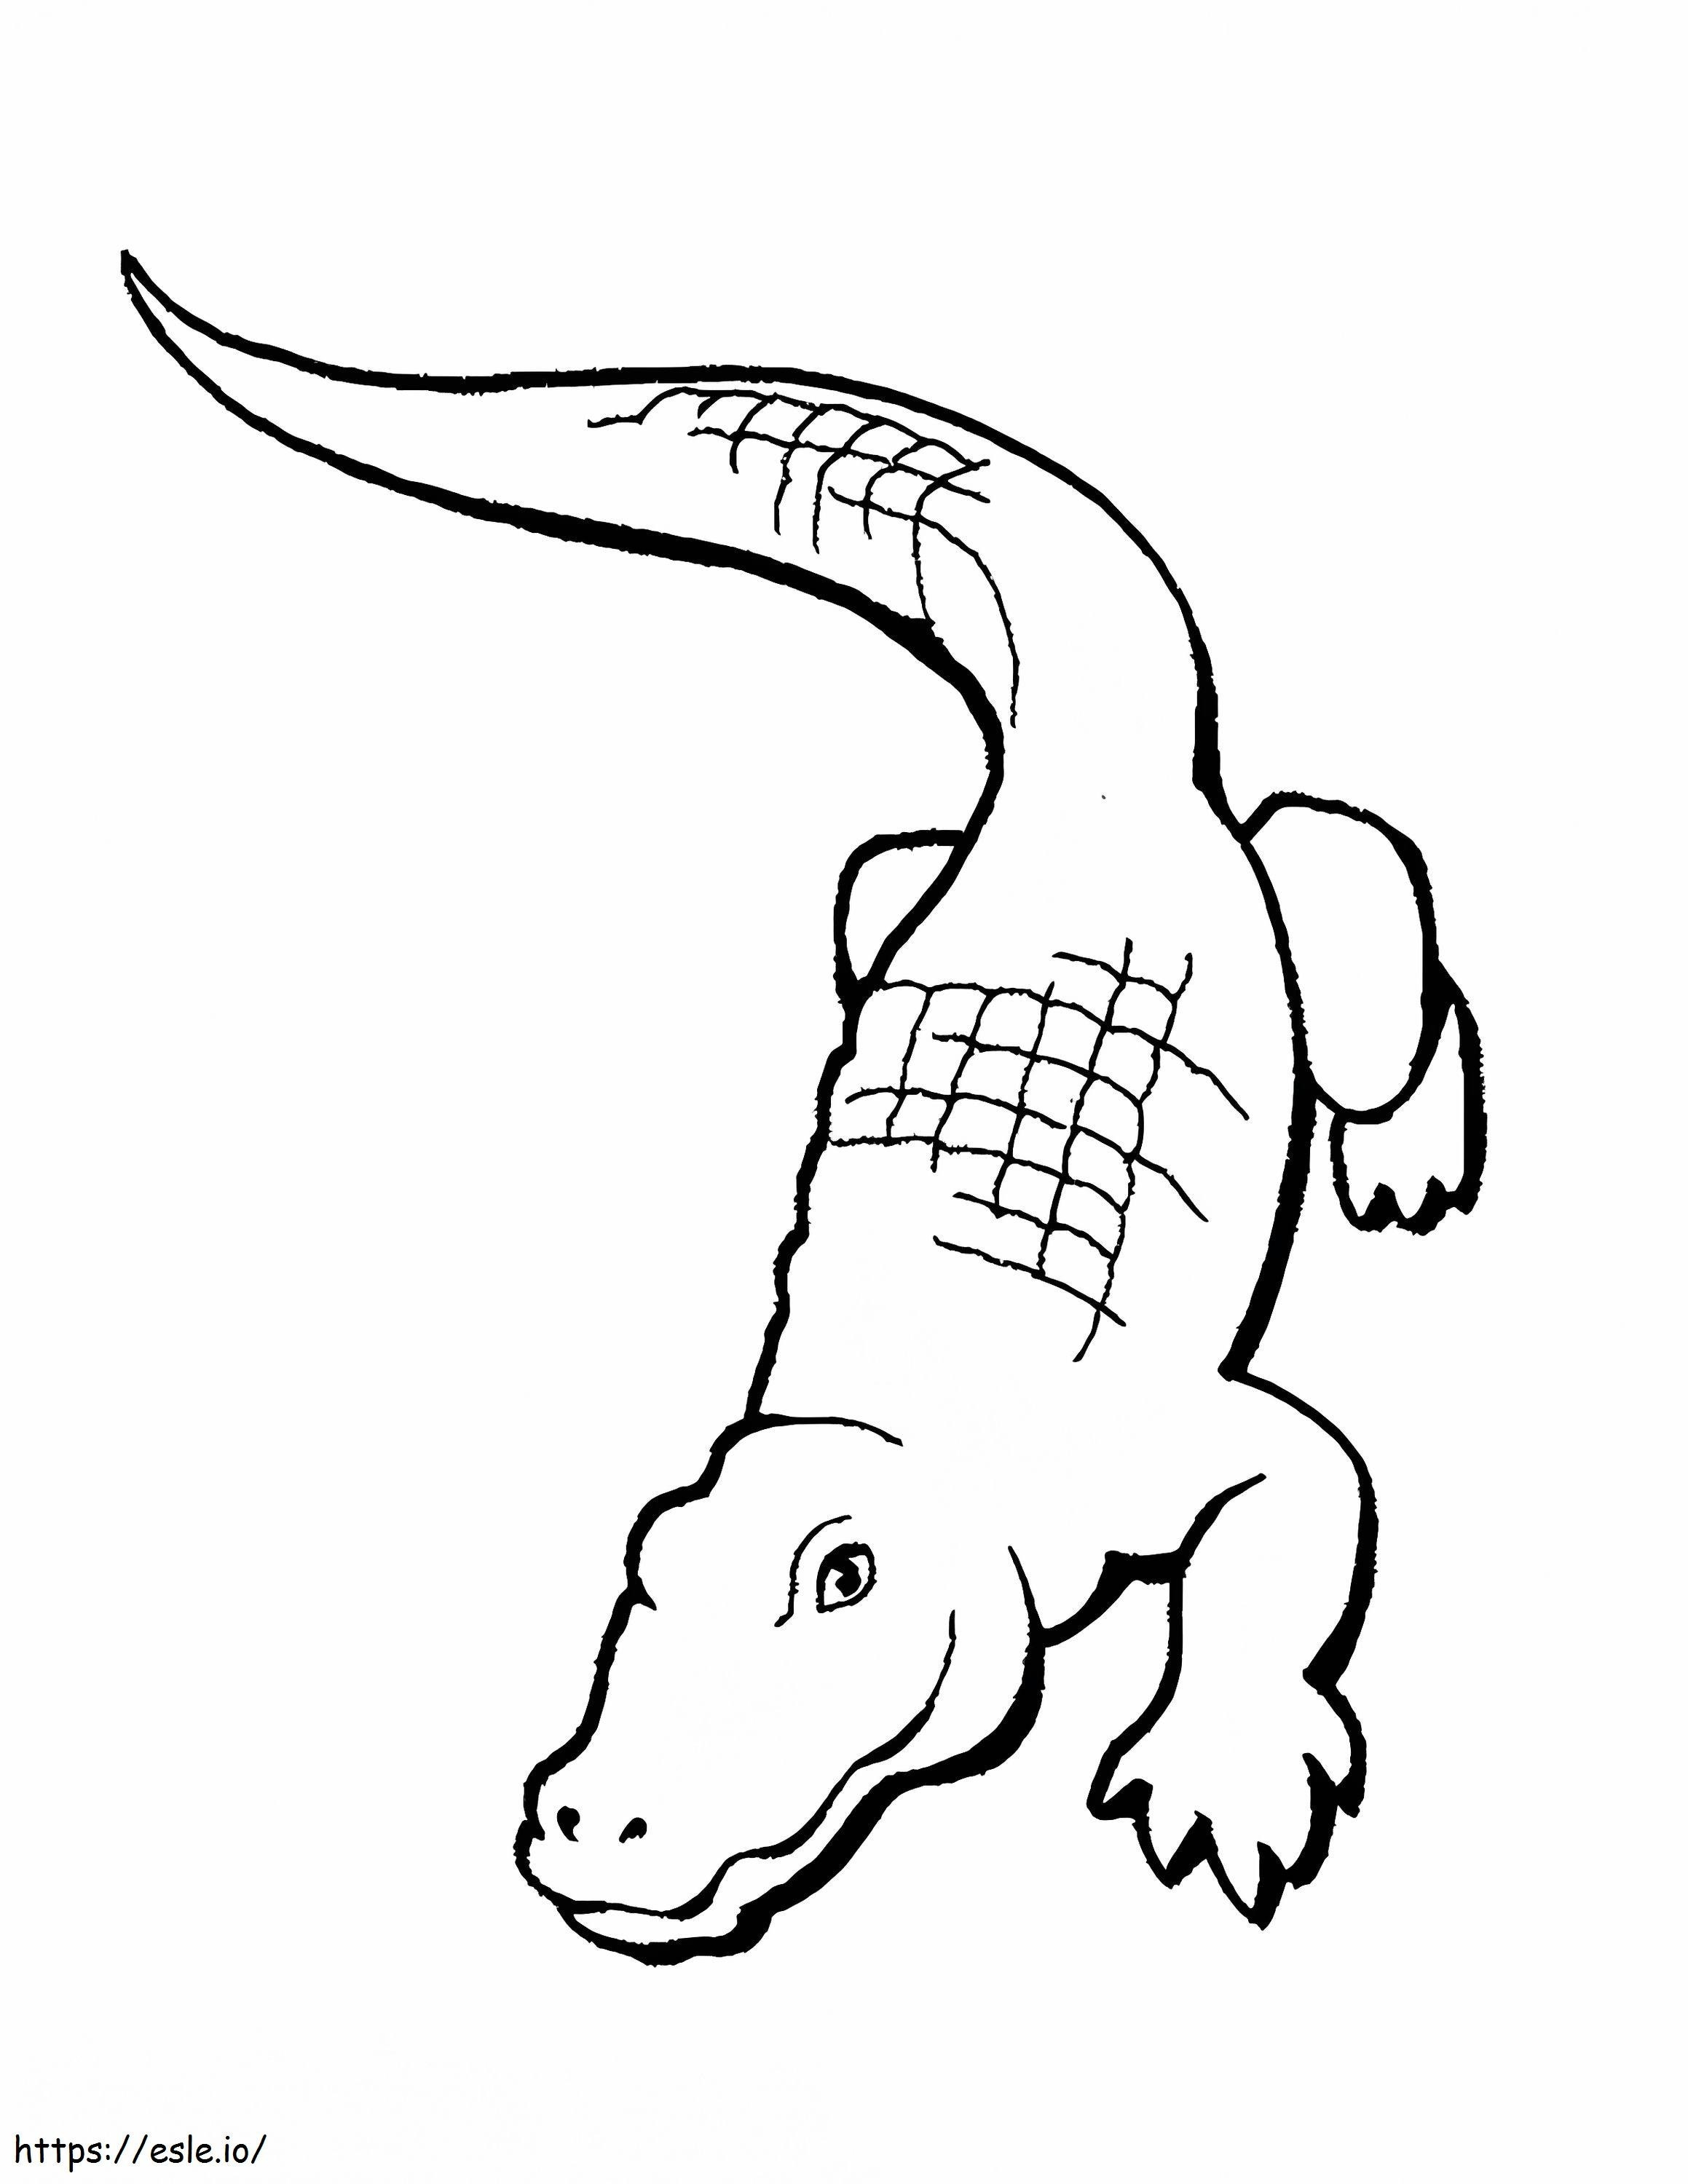 Crocodile Basic Drawing coloring page